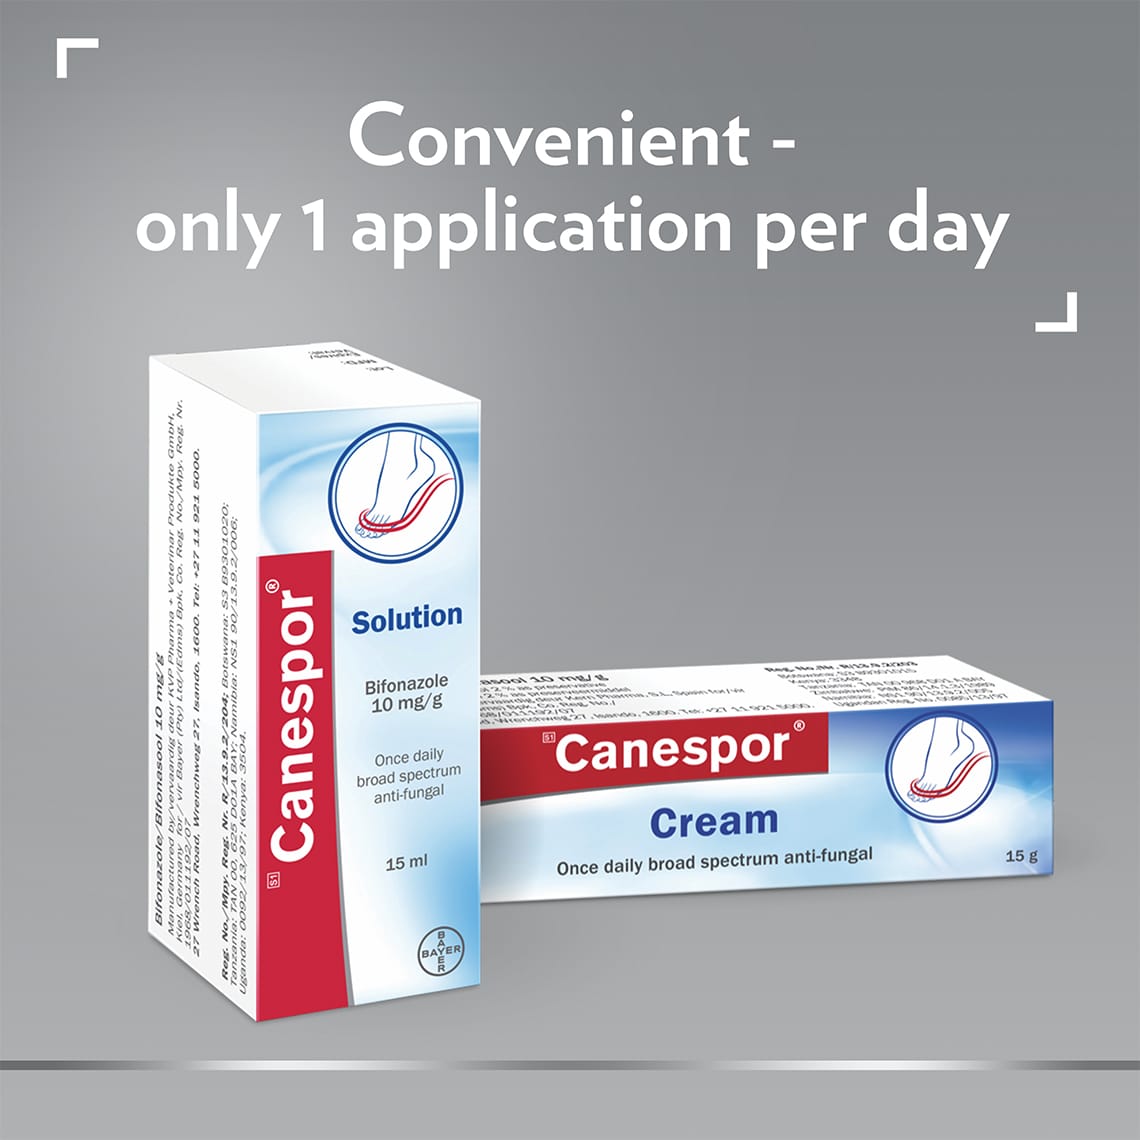 Canespor Cream and Solution Bifonazole | Canesten products